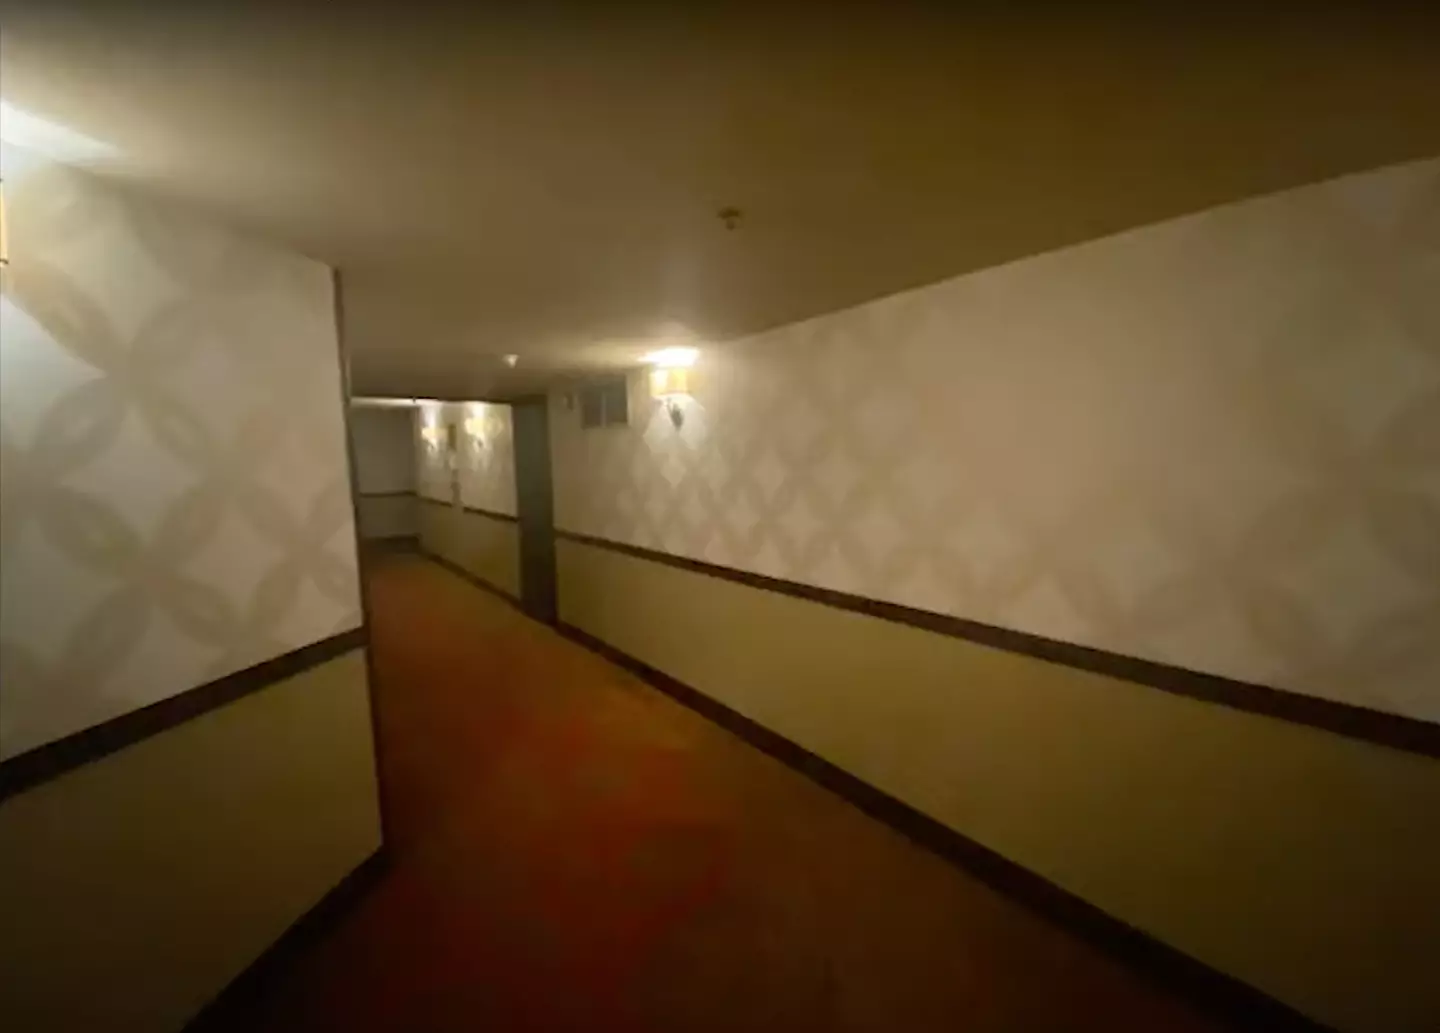 Hotel corridors are always gonna be creepy.